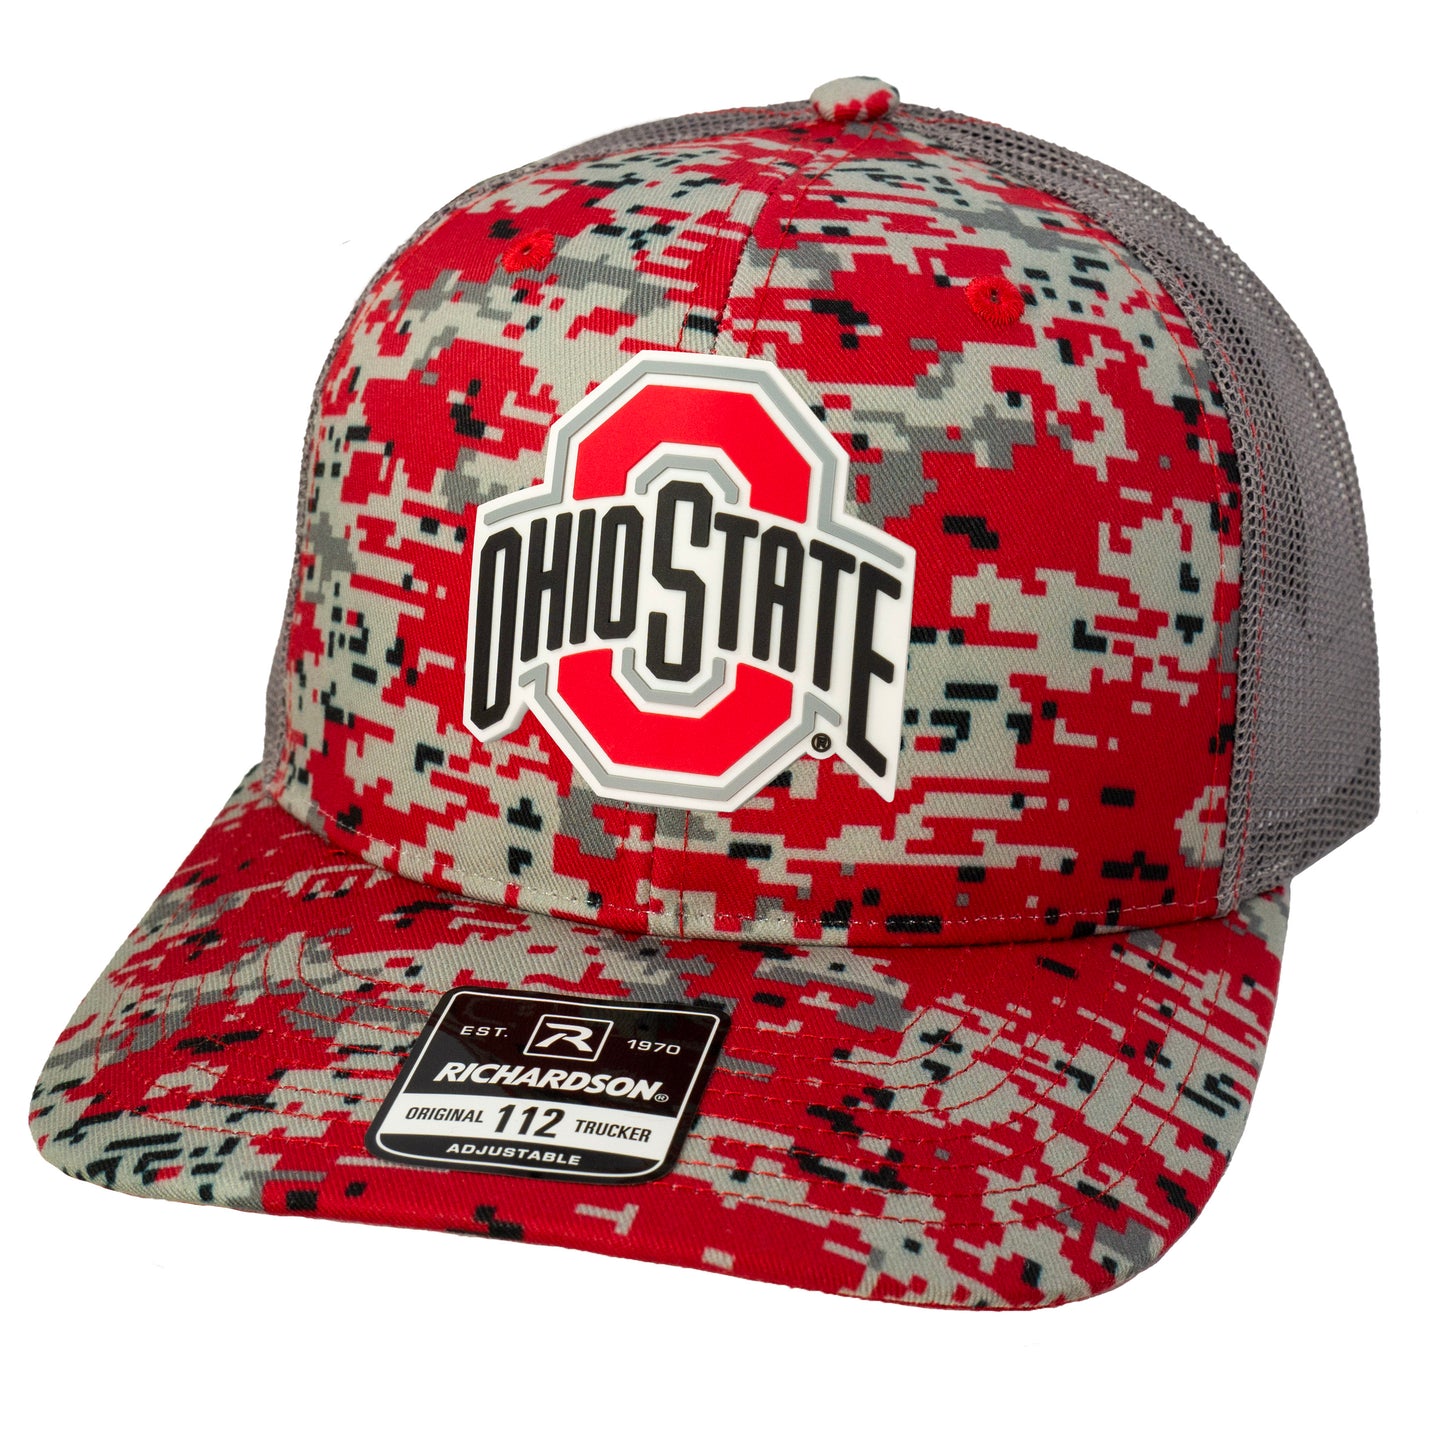 Ohio State Buckeyes 3D Patterned Snapback Trucker Hat- Red Digital Camo - Ten Gallon Hat Co.